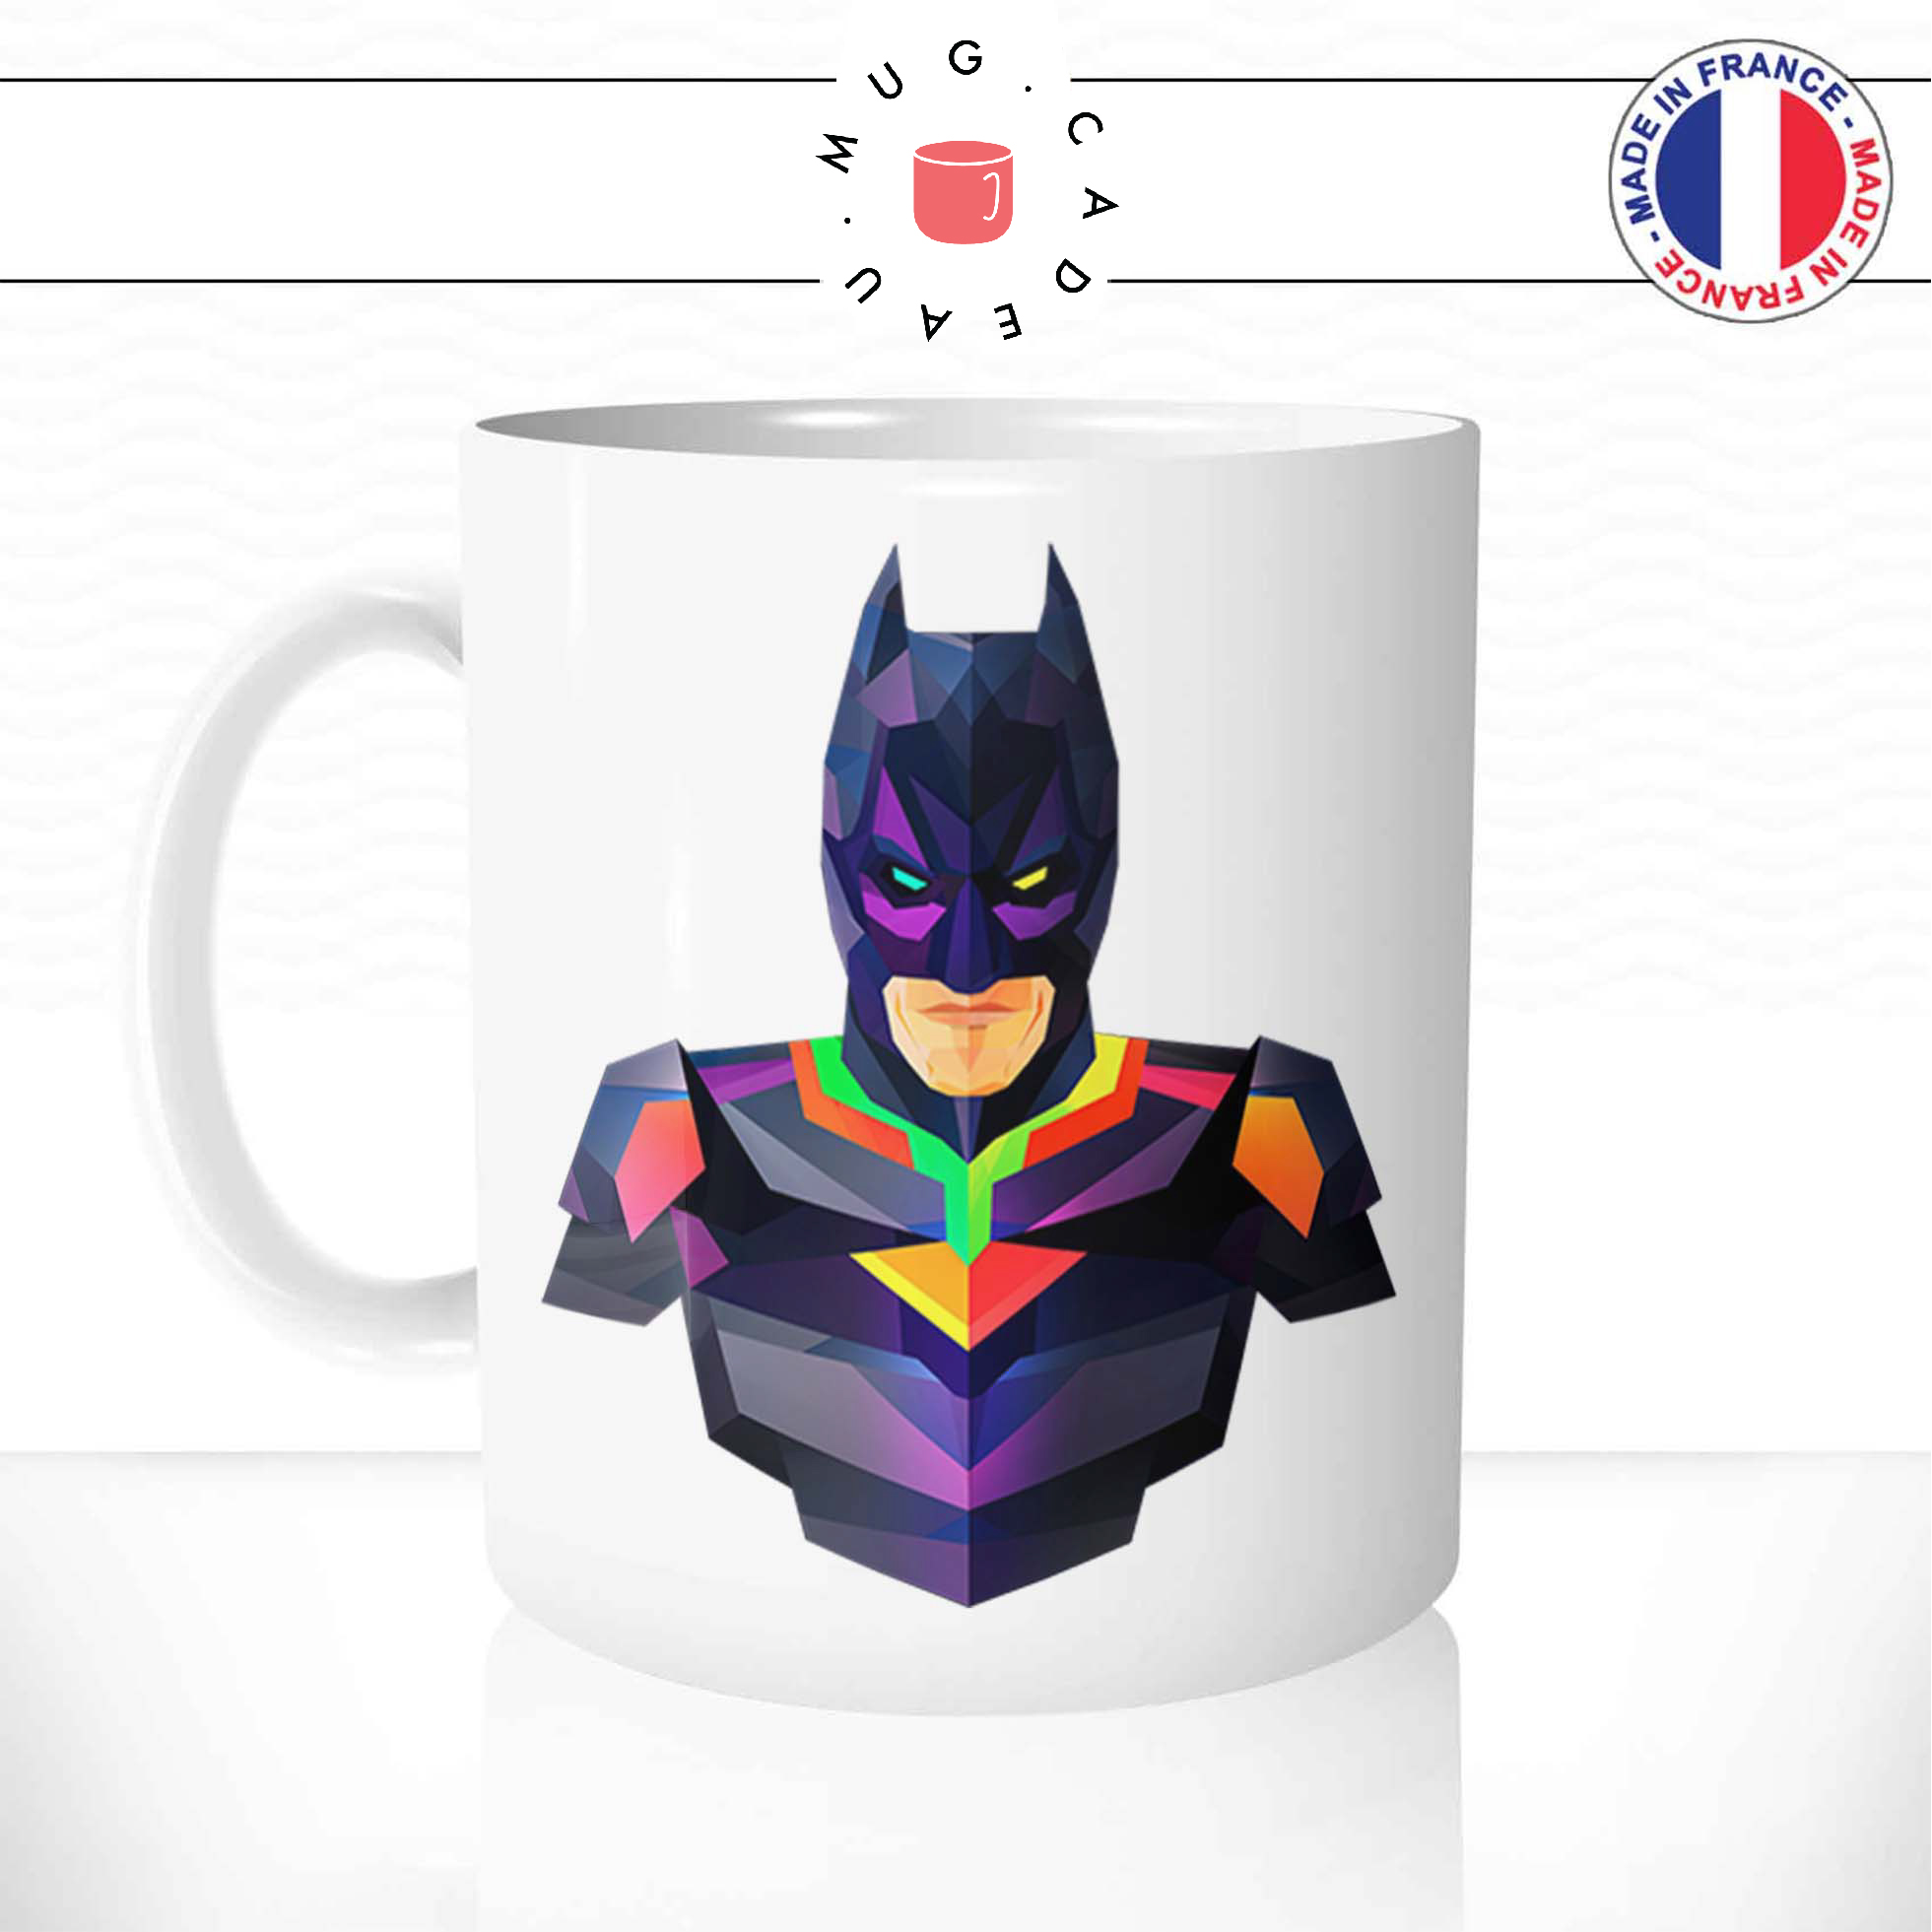 mug-tasse-ref3-super-hero-batman-origami-couleurs-cafe-the-mugs-tasses-personnalise-anse-gauche